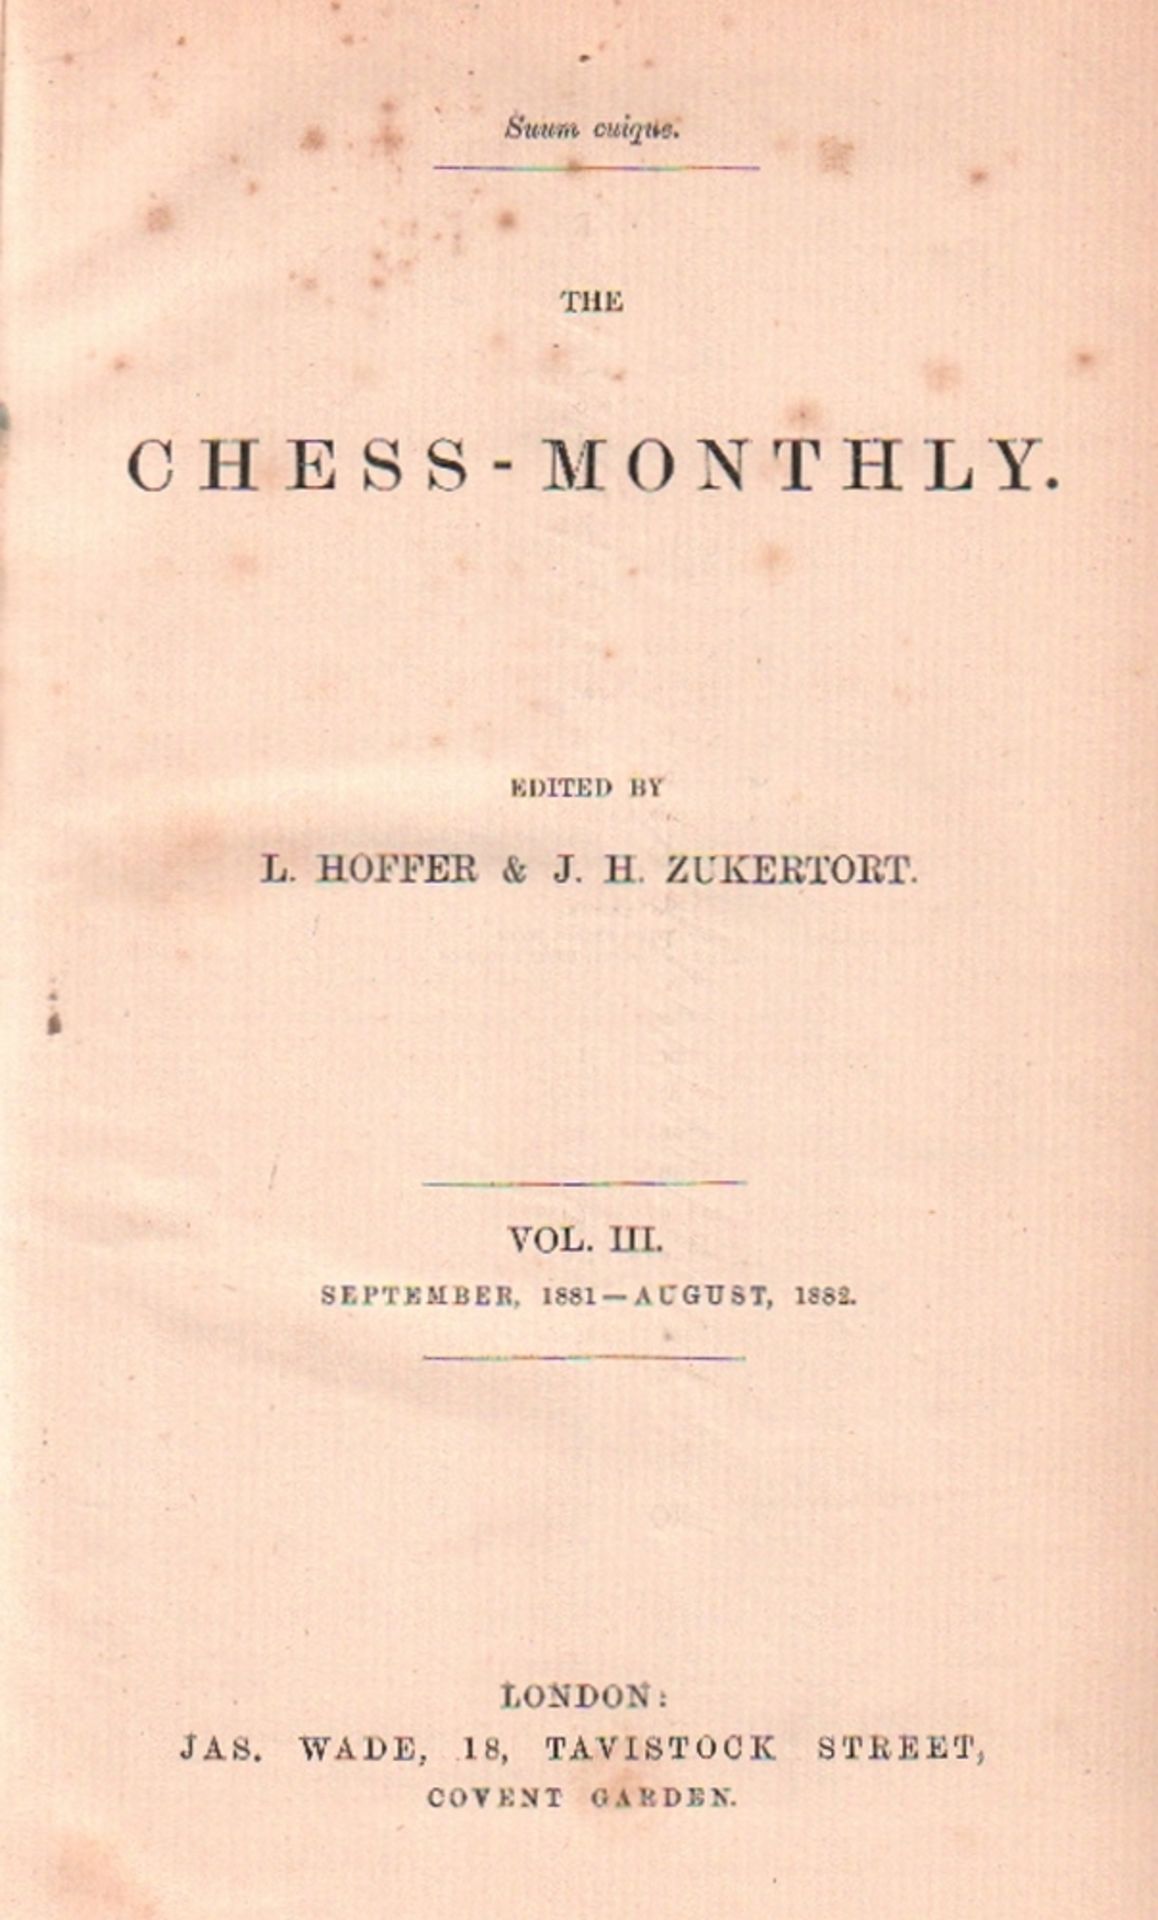 The Chess - Monthly. Edited by L. Hoffer & J. H. Zukertort. Volume III, September 1881 - August